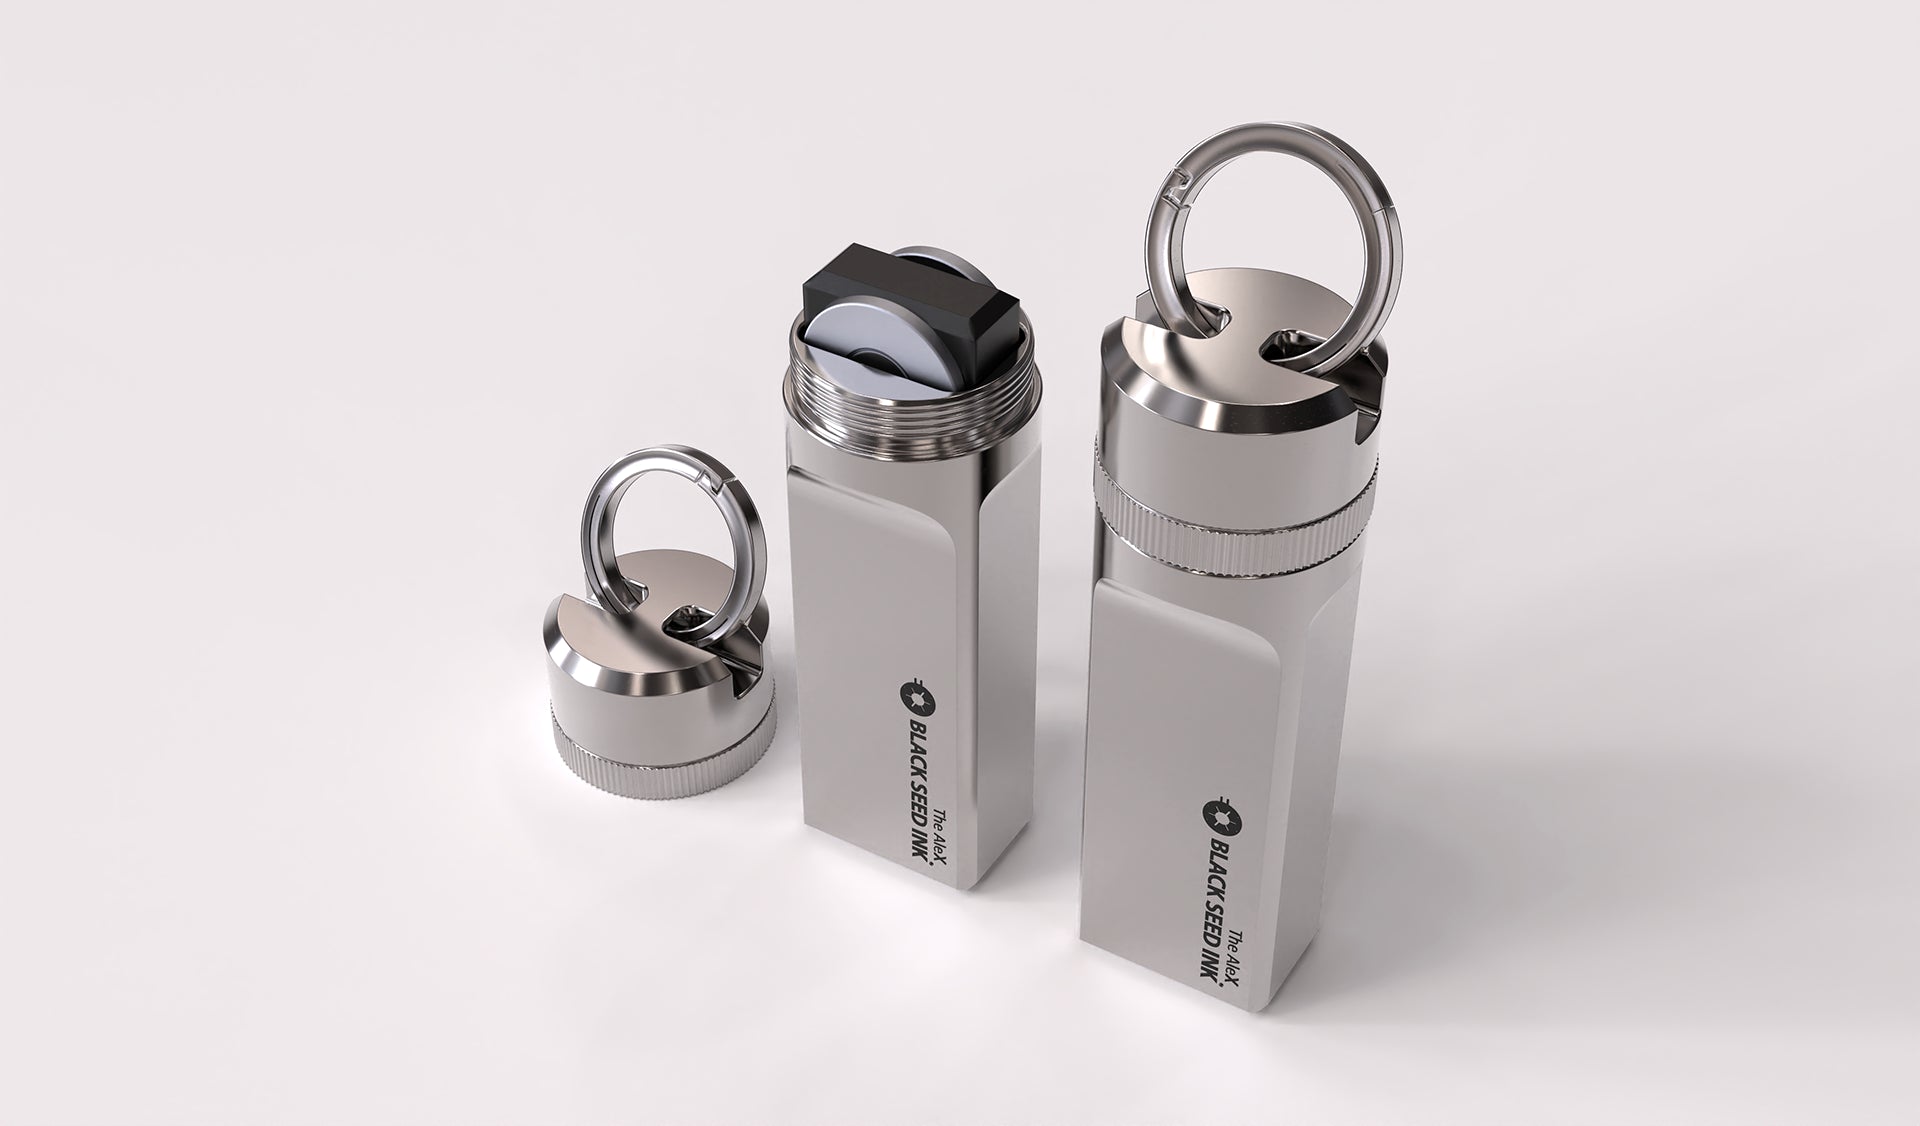 Two brush finish titanium storage capsule for Ledger Nano wallets